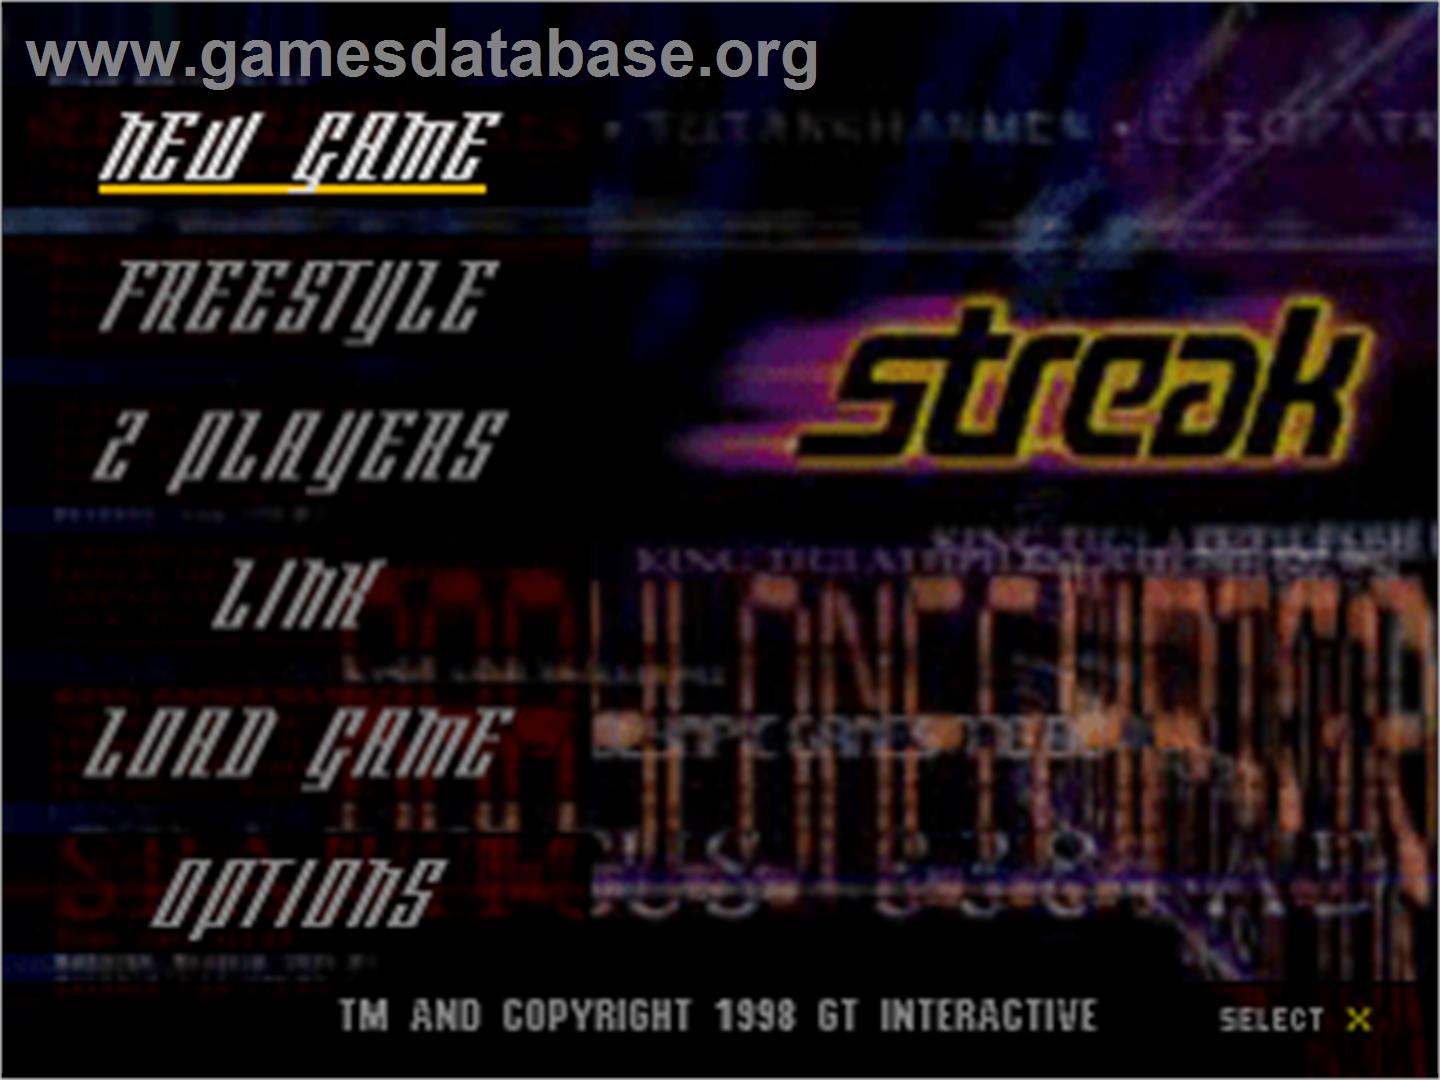 Streak Hoverboard Racing - Sony Playstation - Artwork - Title Screen